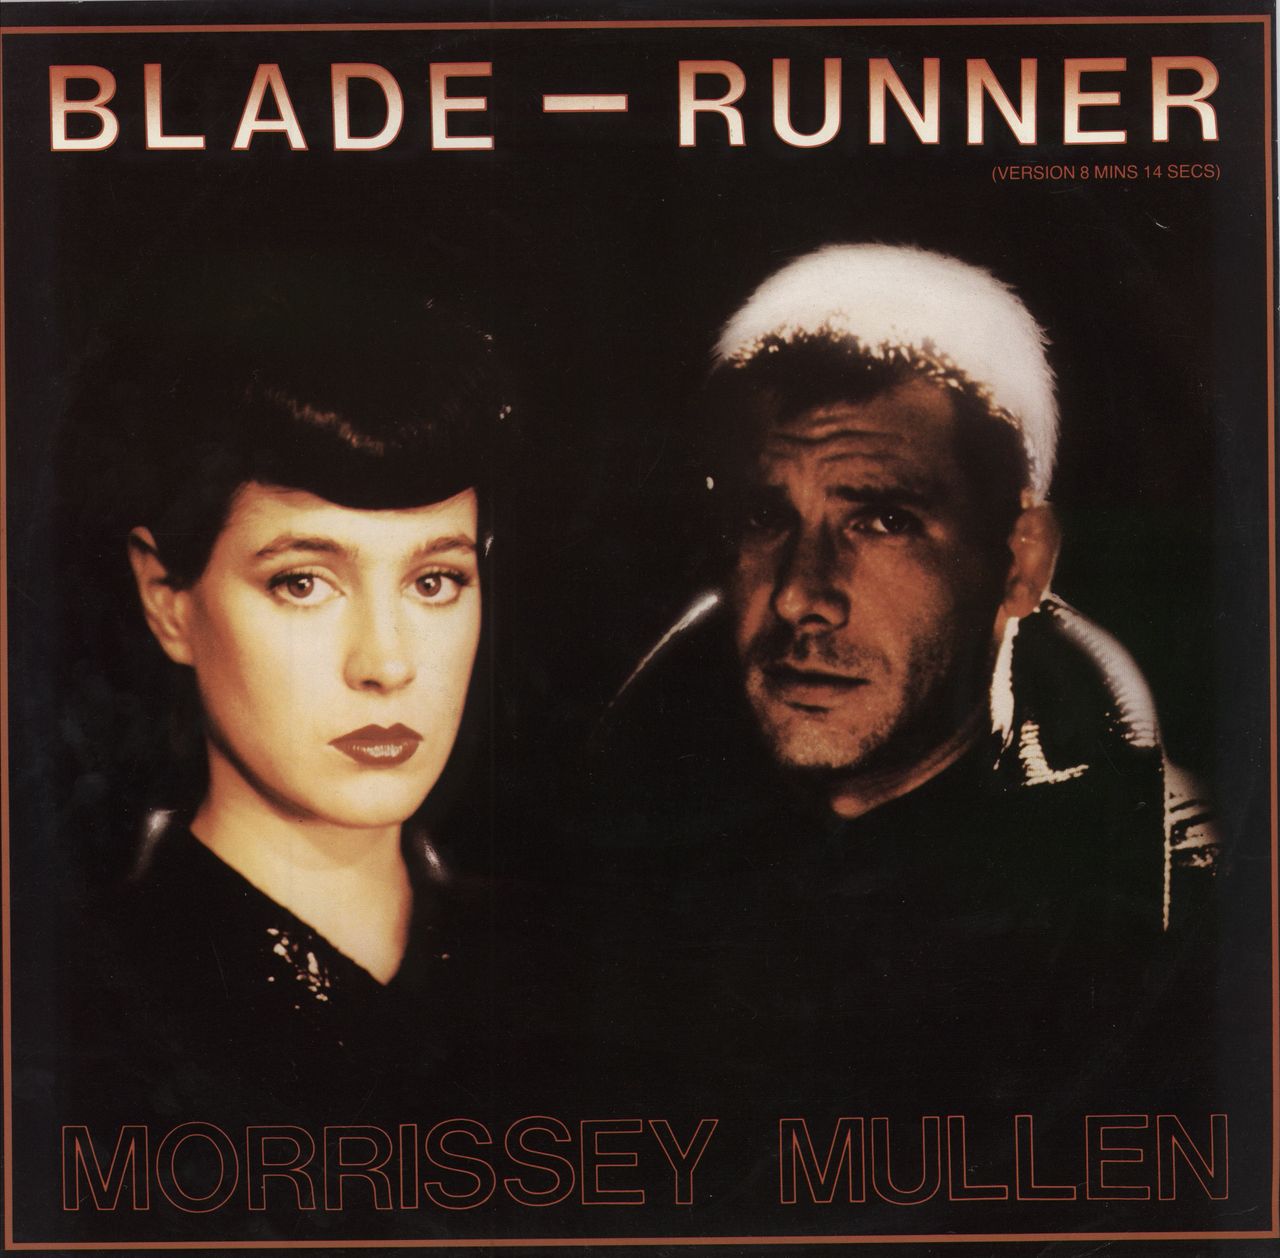 Morrissey Mullen Blade-Runner + pr UK 12" vinyl single (12 inch record / Maxi-single) BEG87T